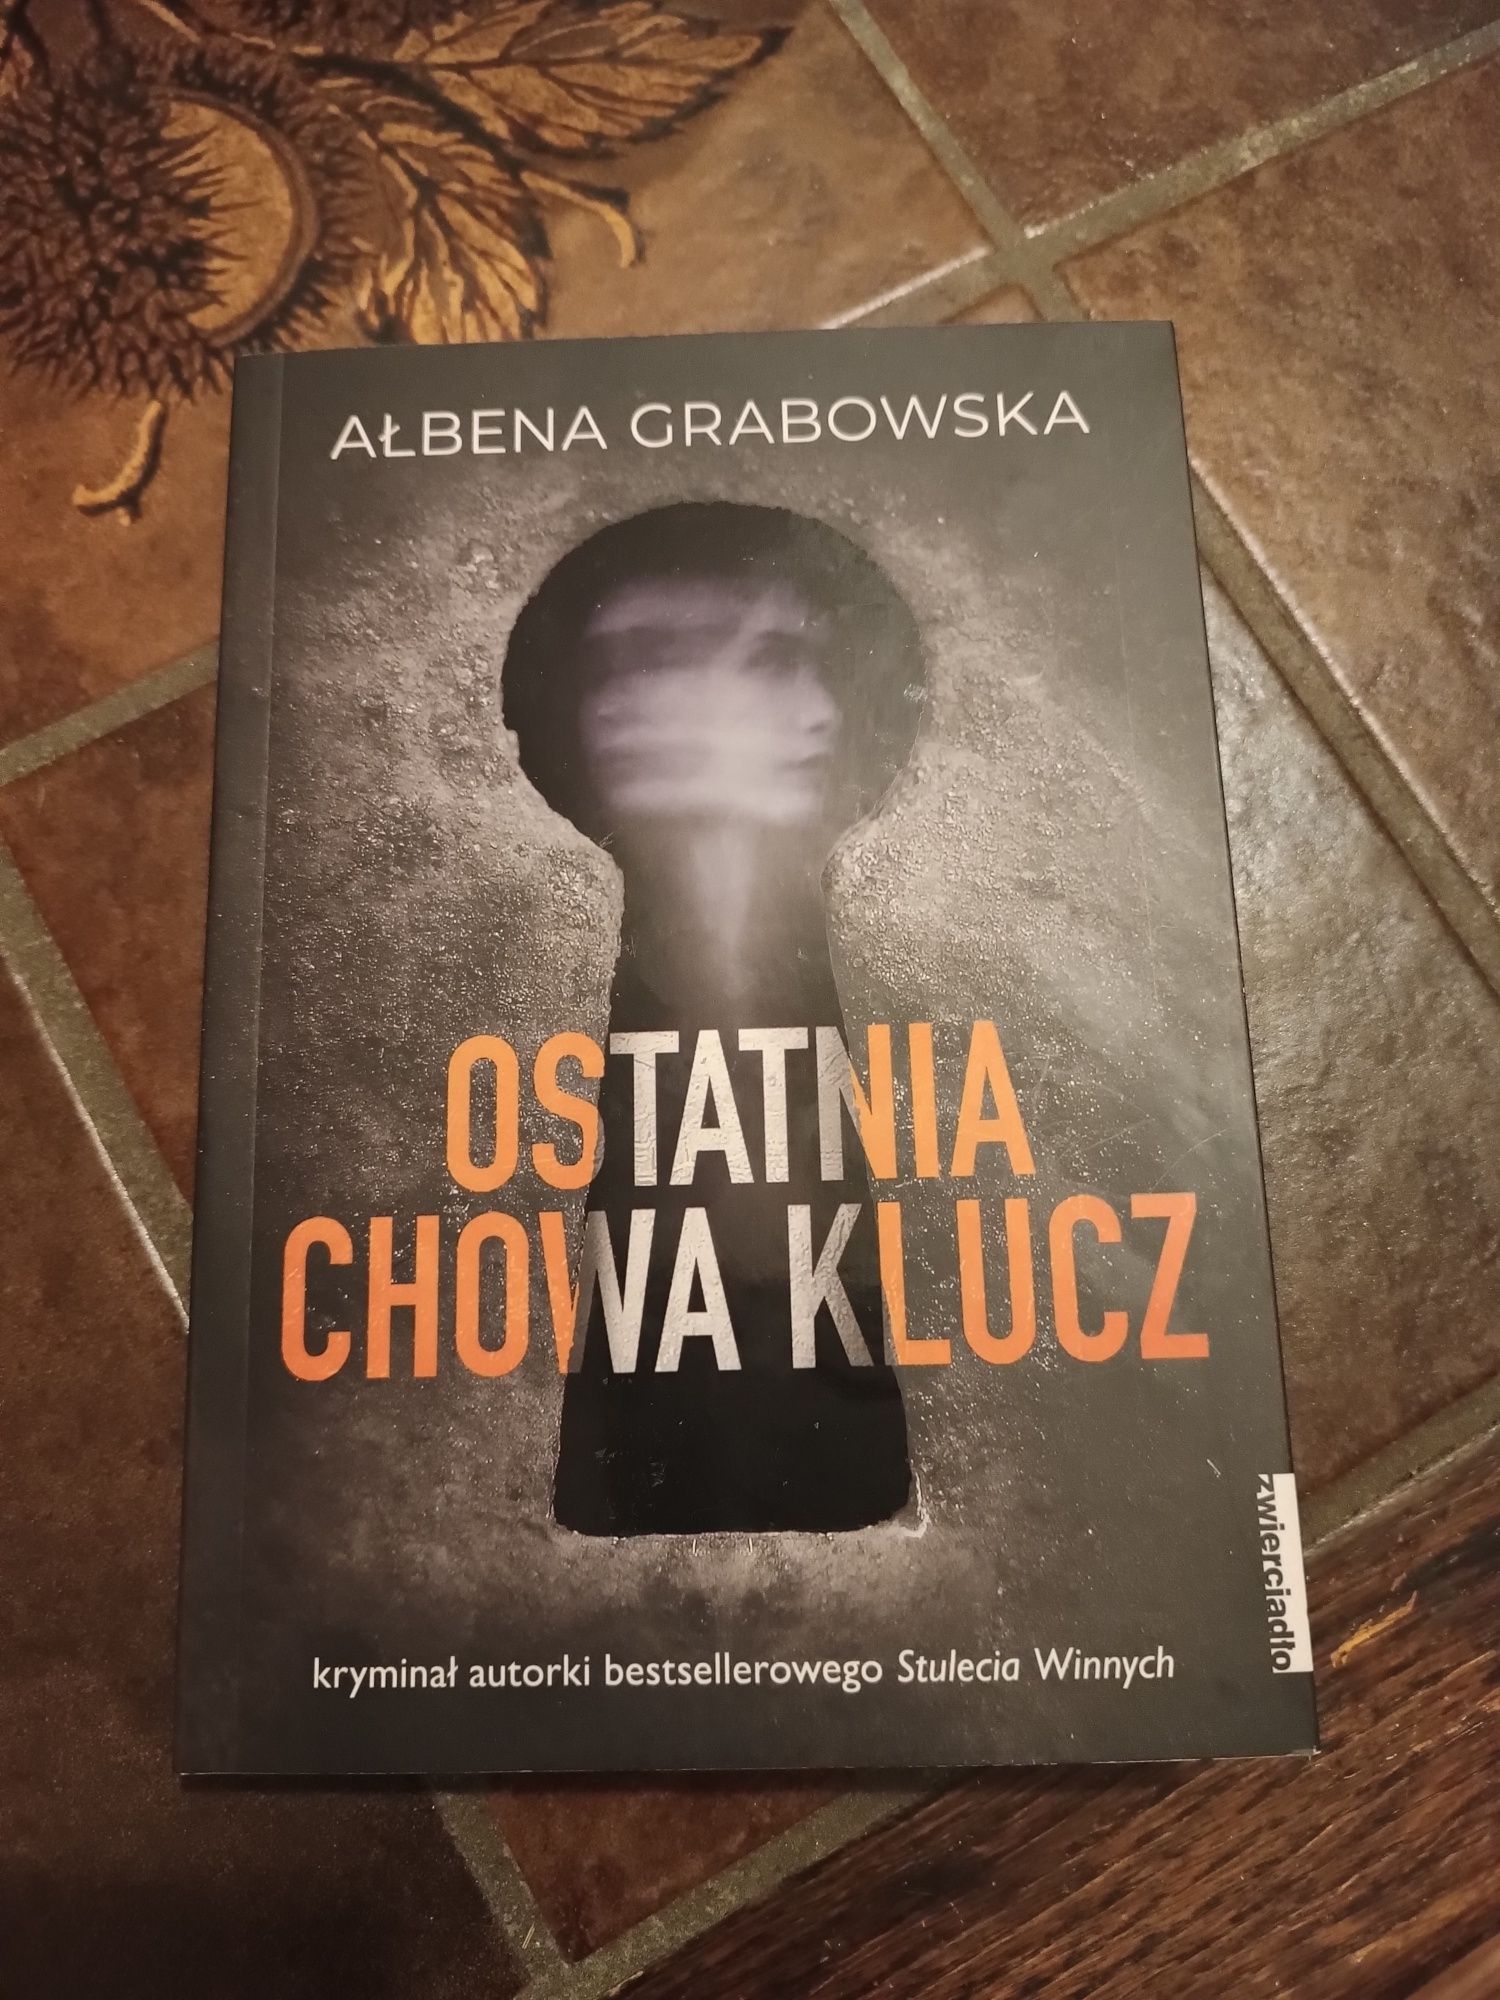 A. Grabowska "Ostatnia chowa klucz"